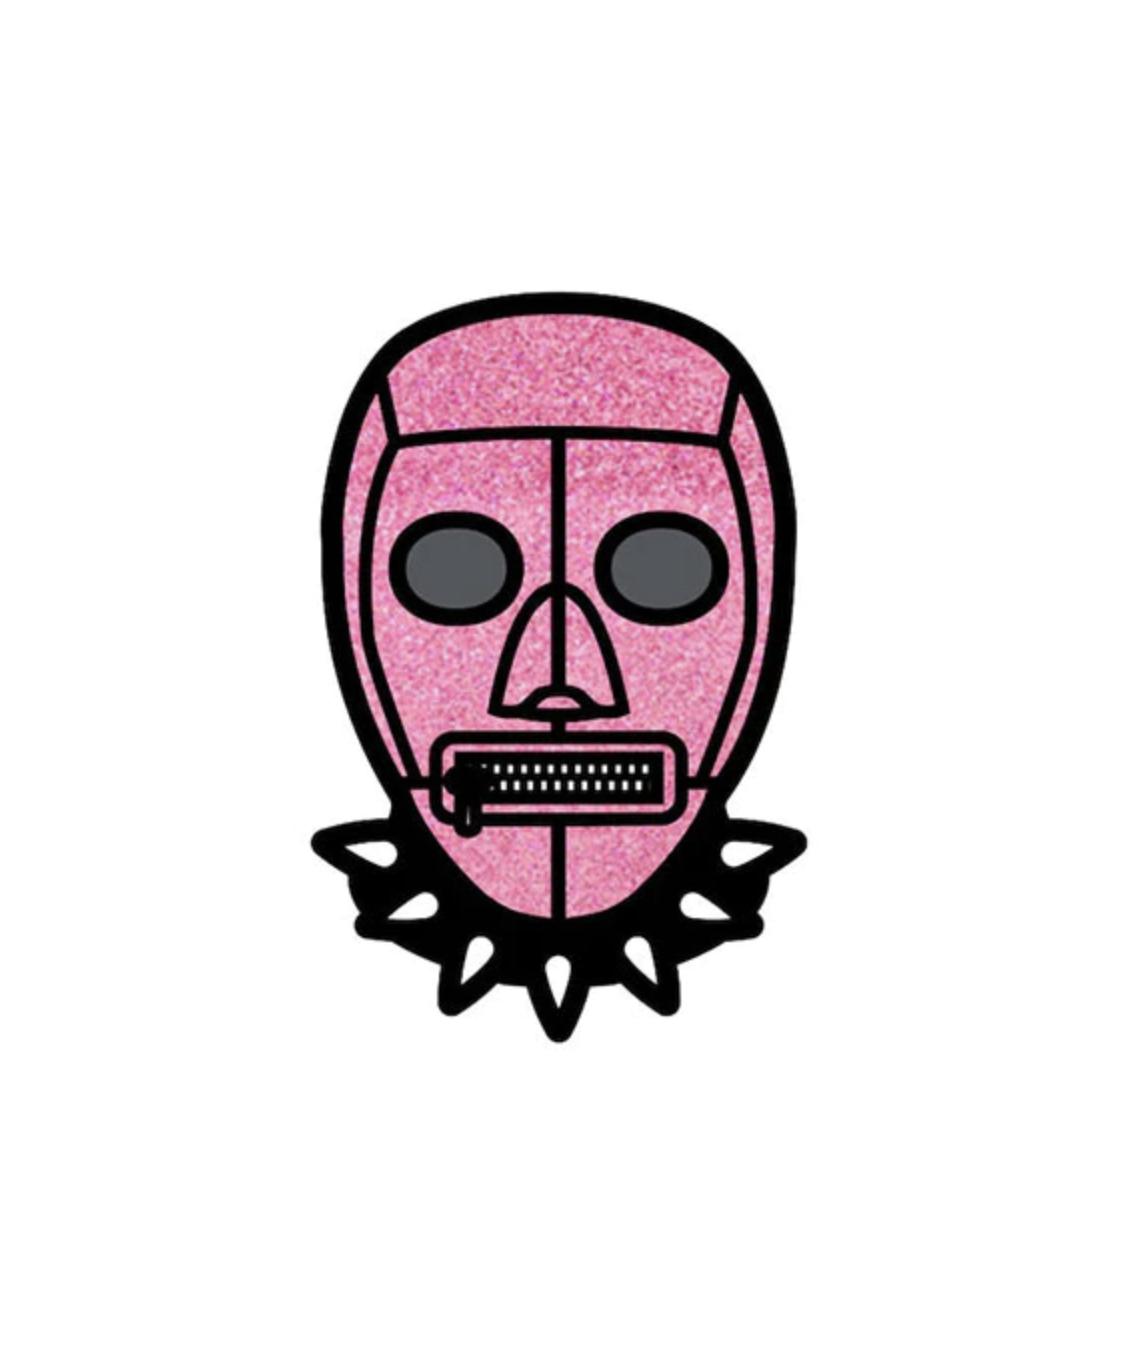 Wood Rocket Lapel Pin - Pink Bondage Mask